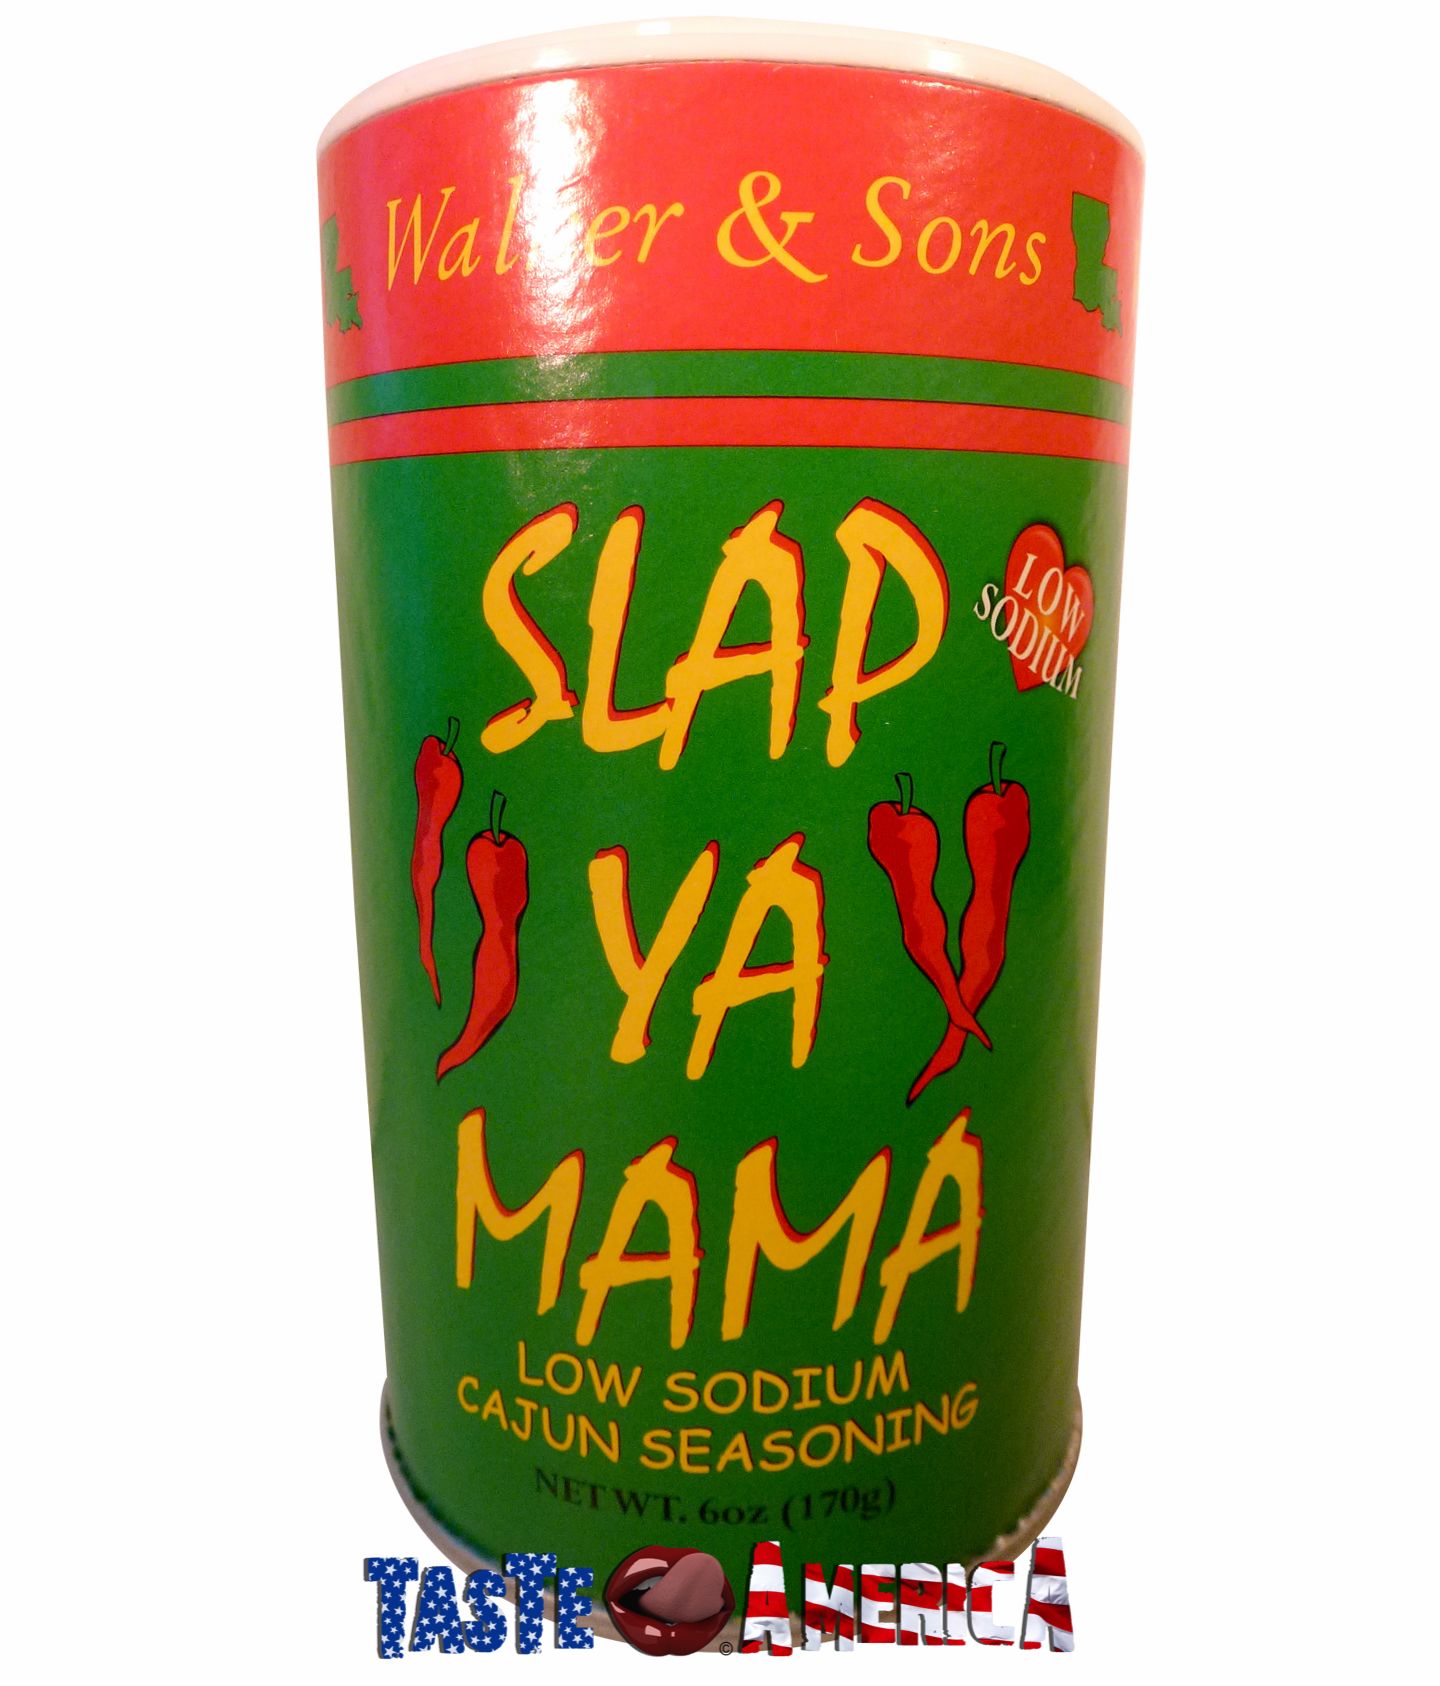 Slap Ya Mama, Low Sodium Cajun Seasoning, Barbecue